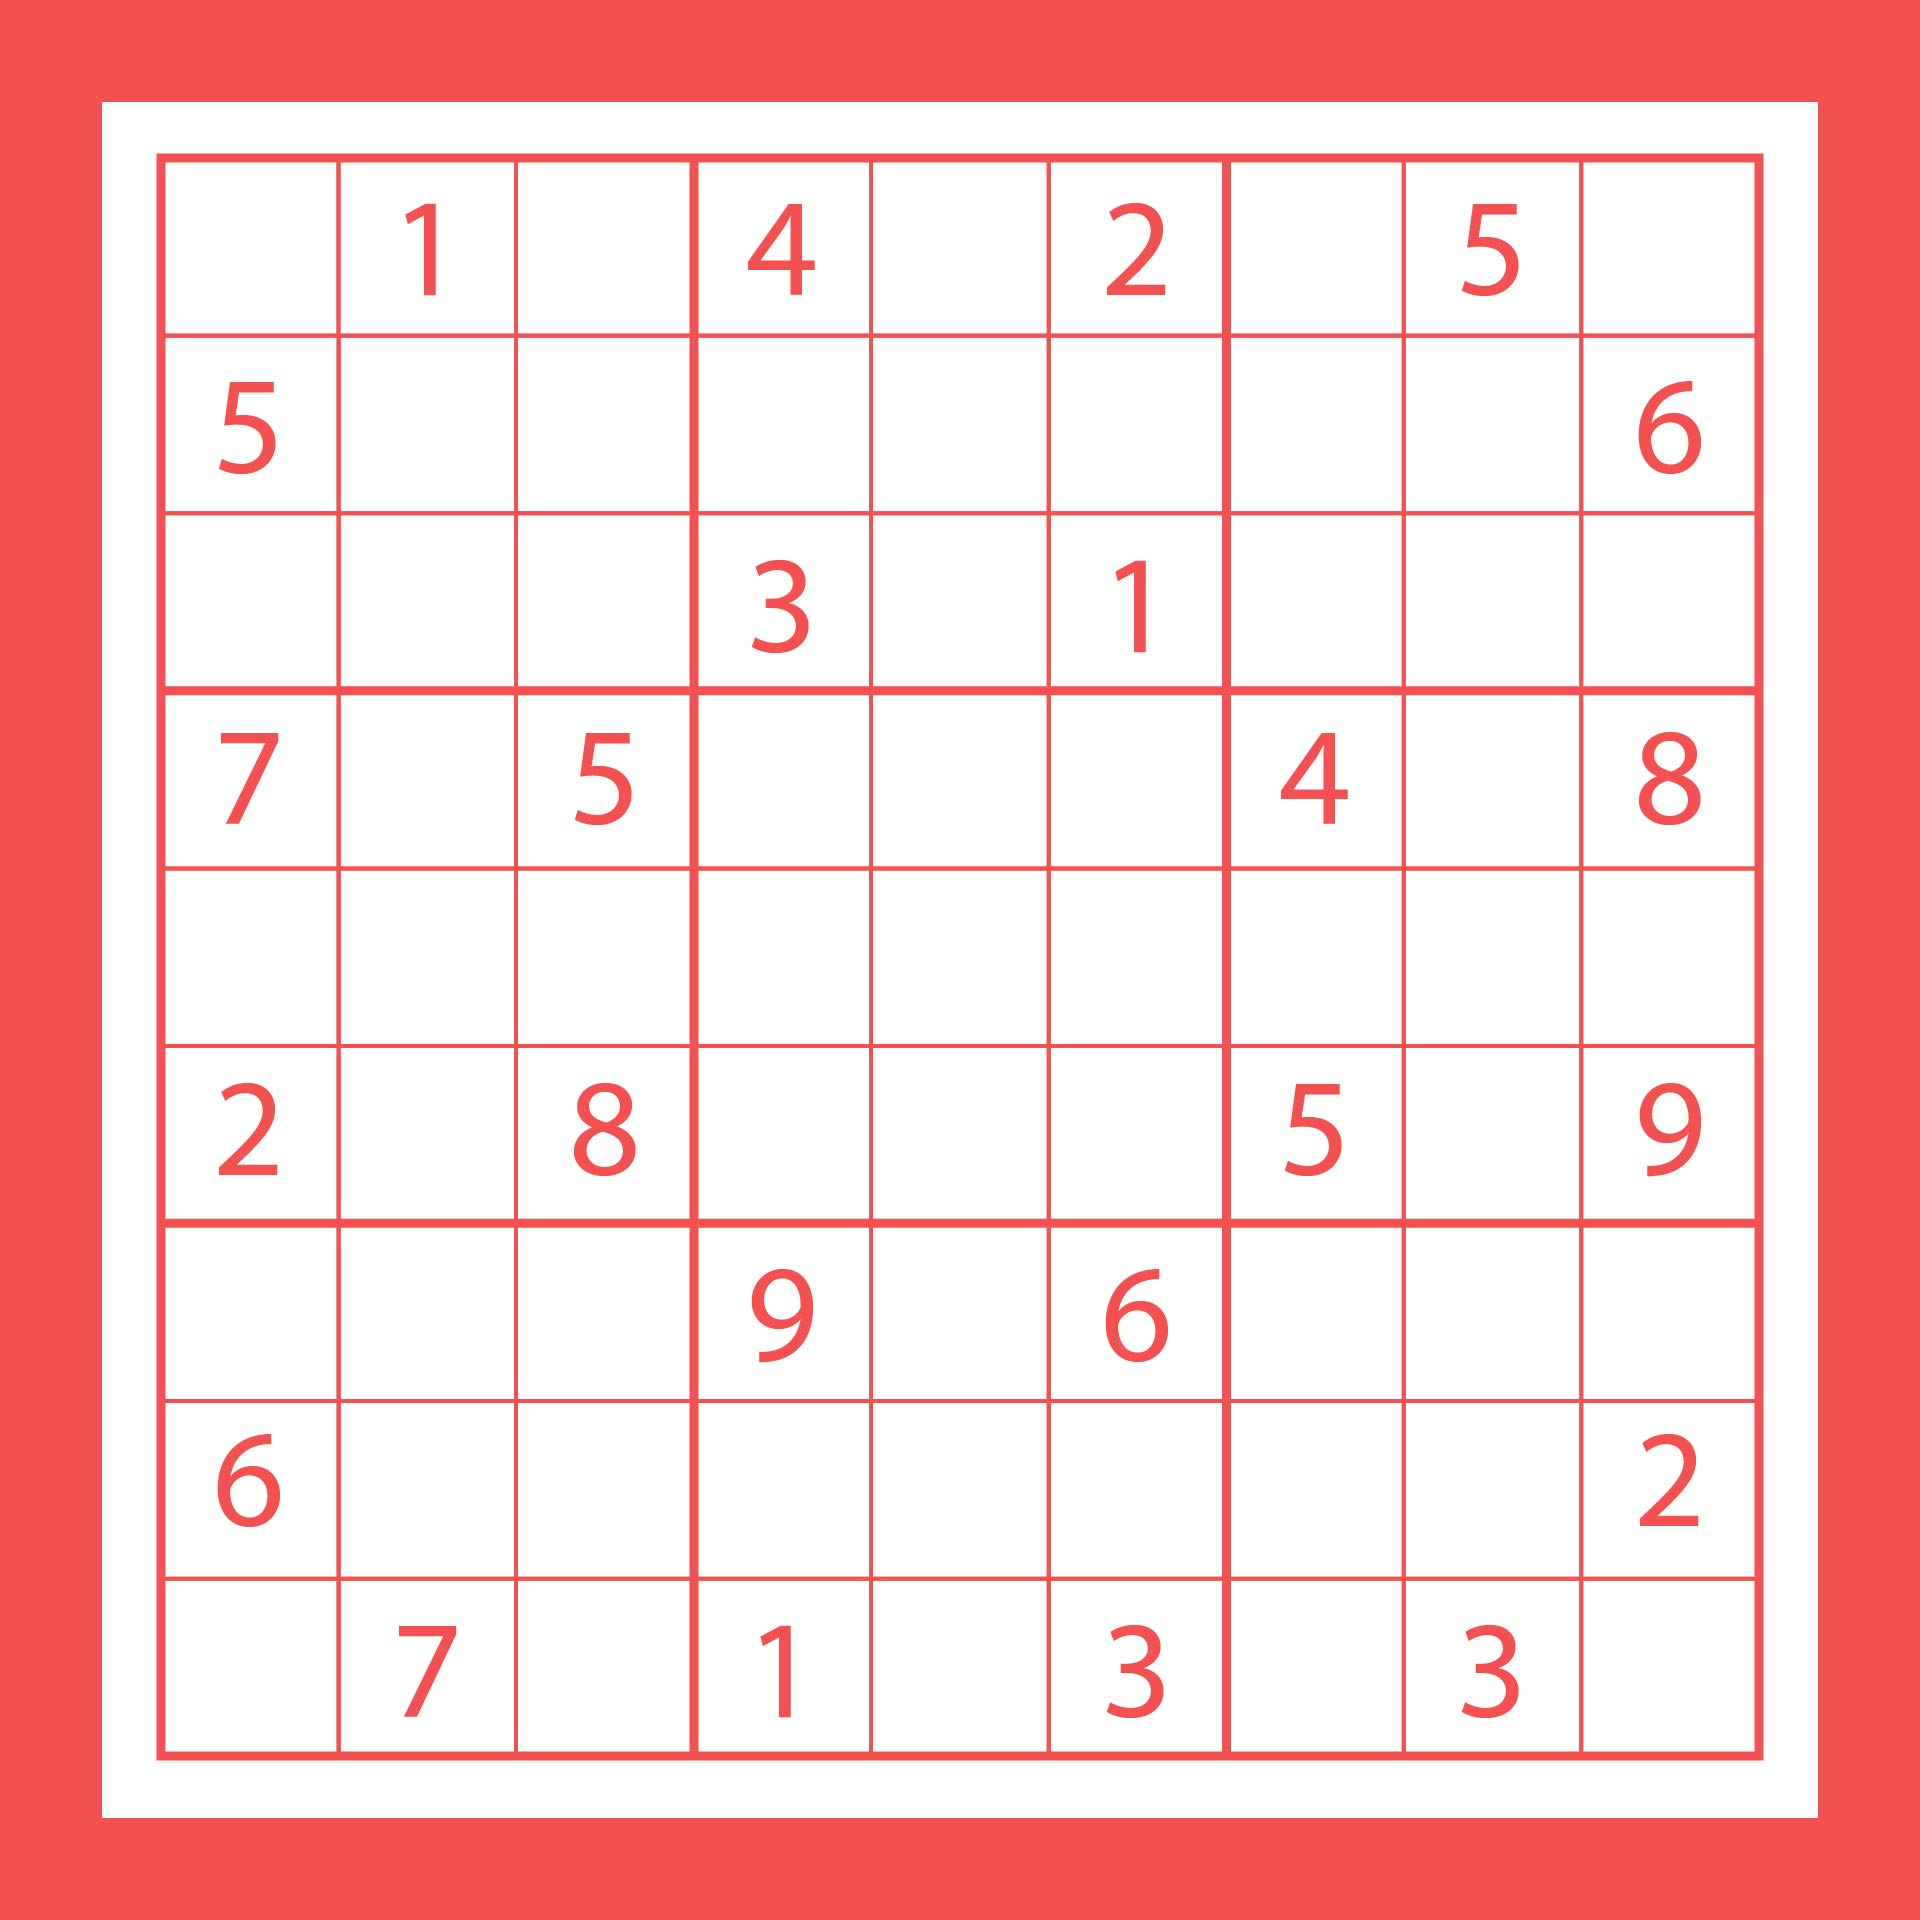 Free Sudoku Puzzle Games Sudoku Online Printable Sudoku